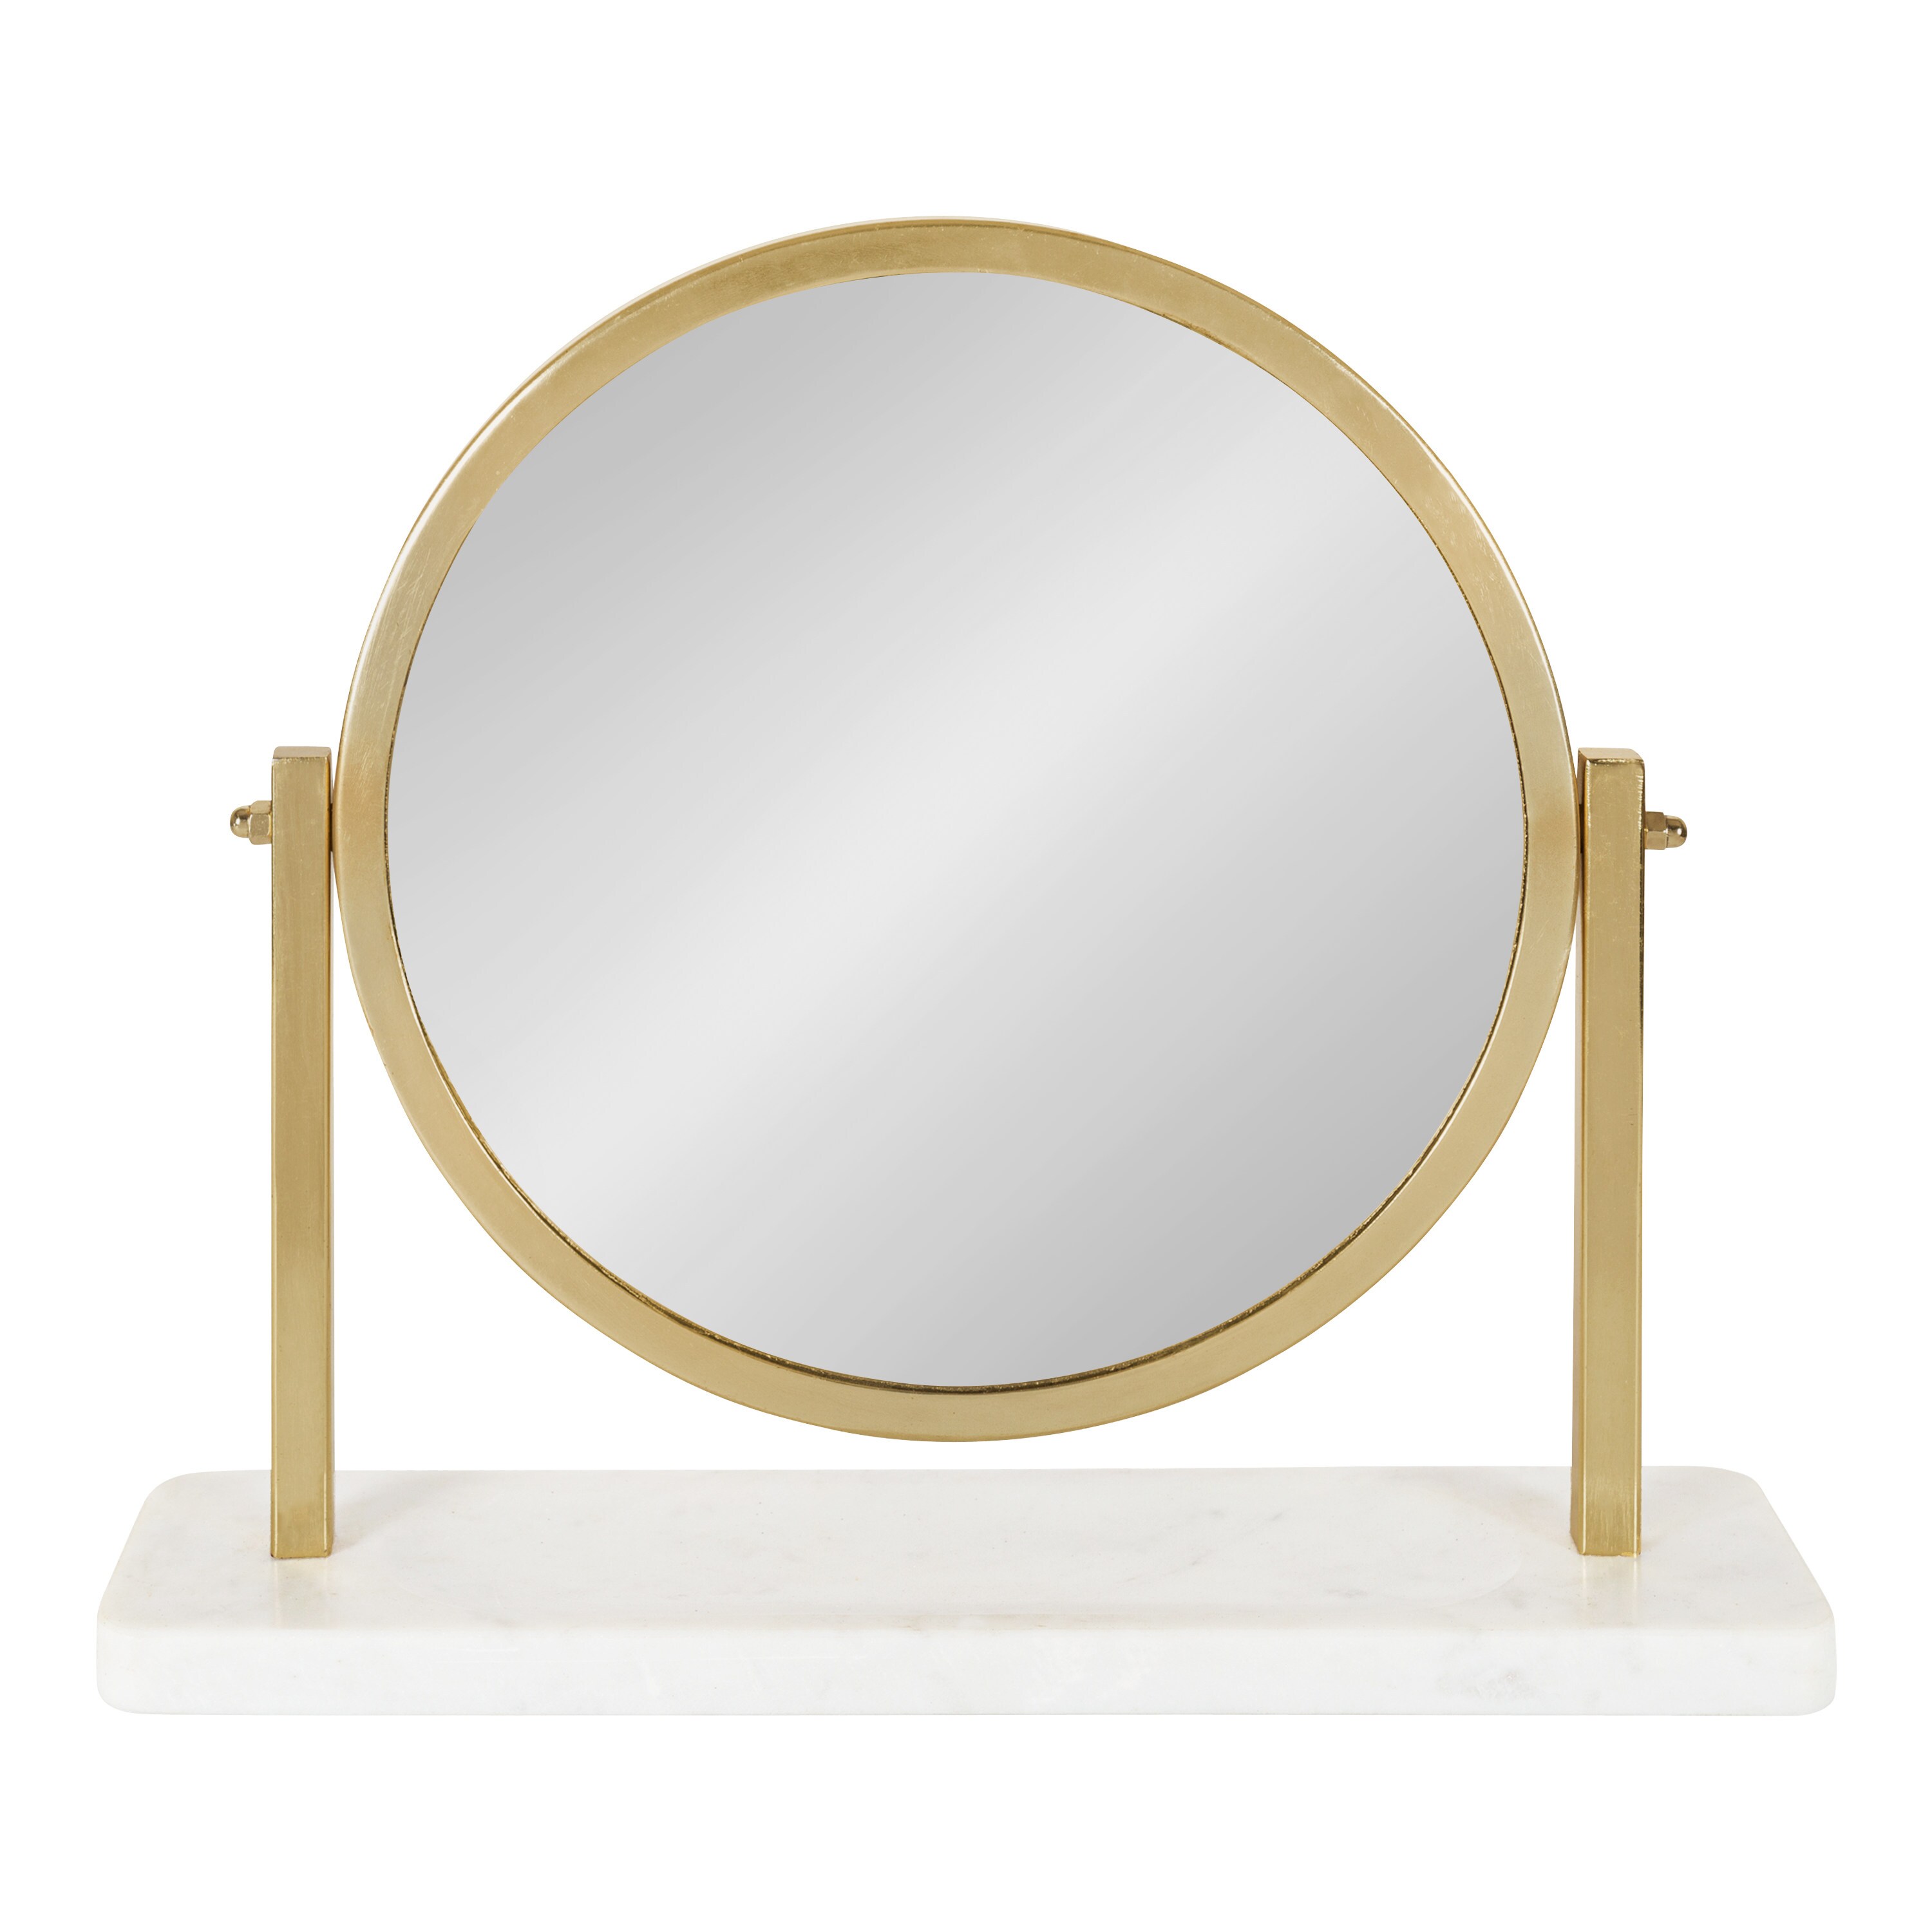 Round Gold Framed Wall Mirror, Circular Mirror Tabletop